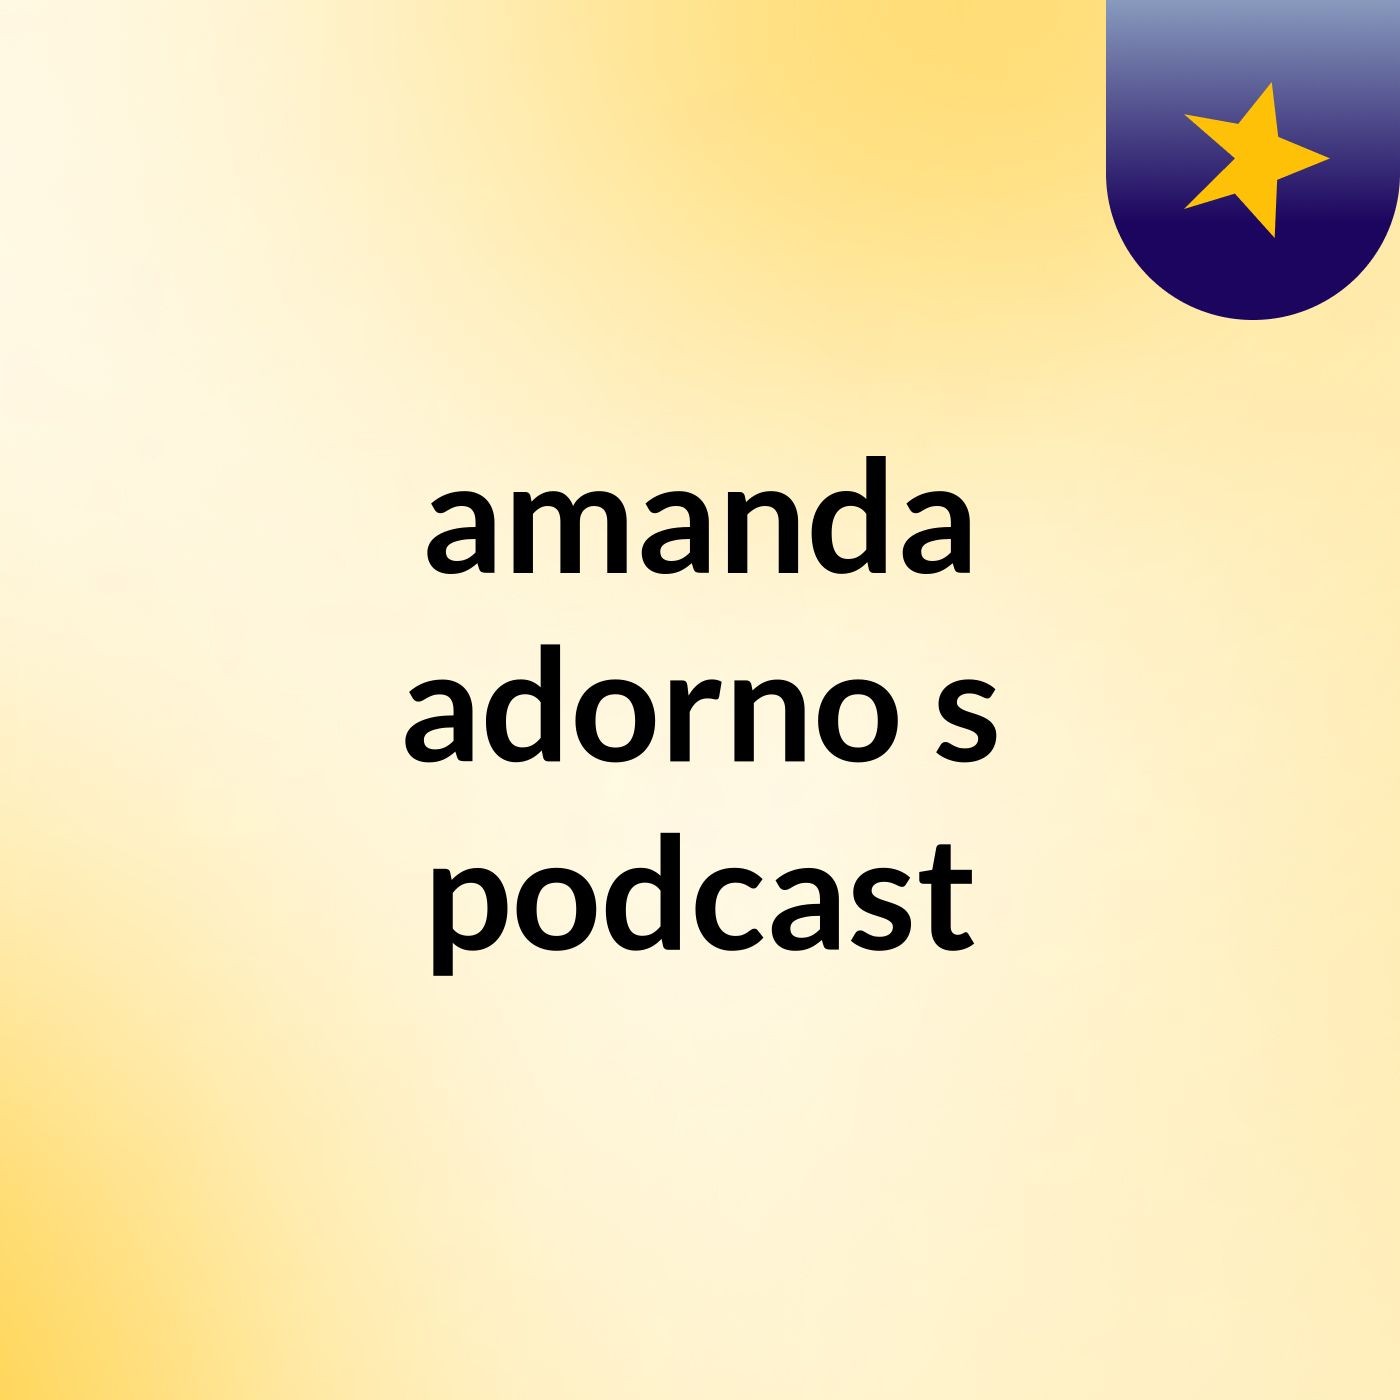 amanda adorno's podcast